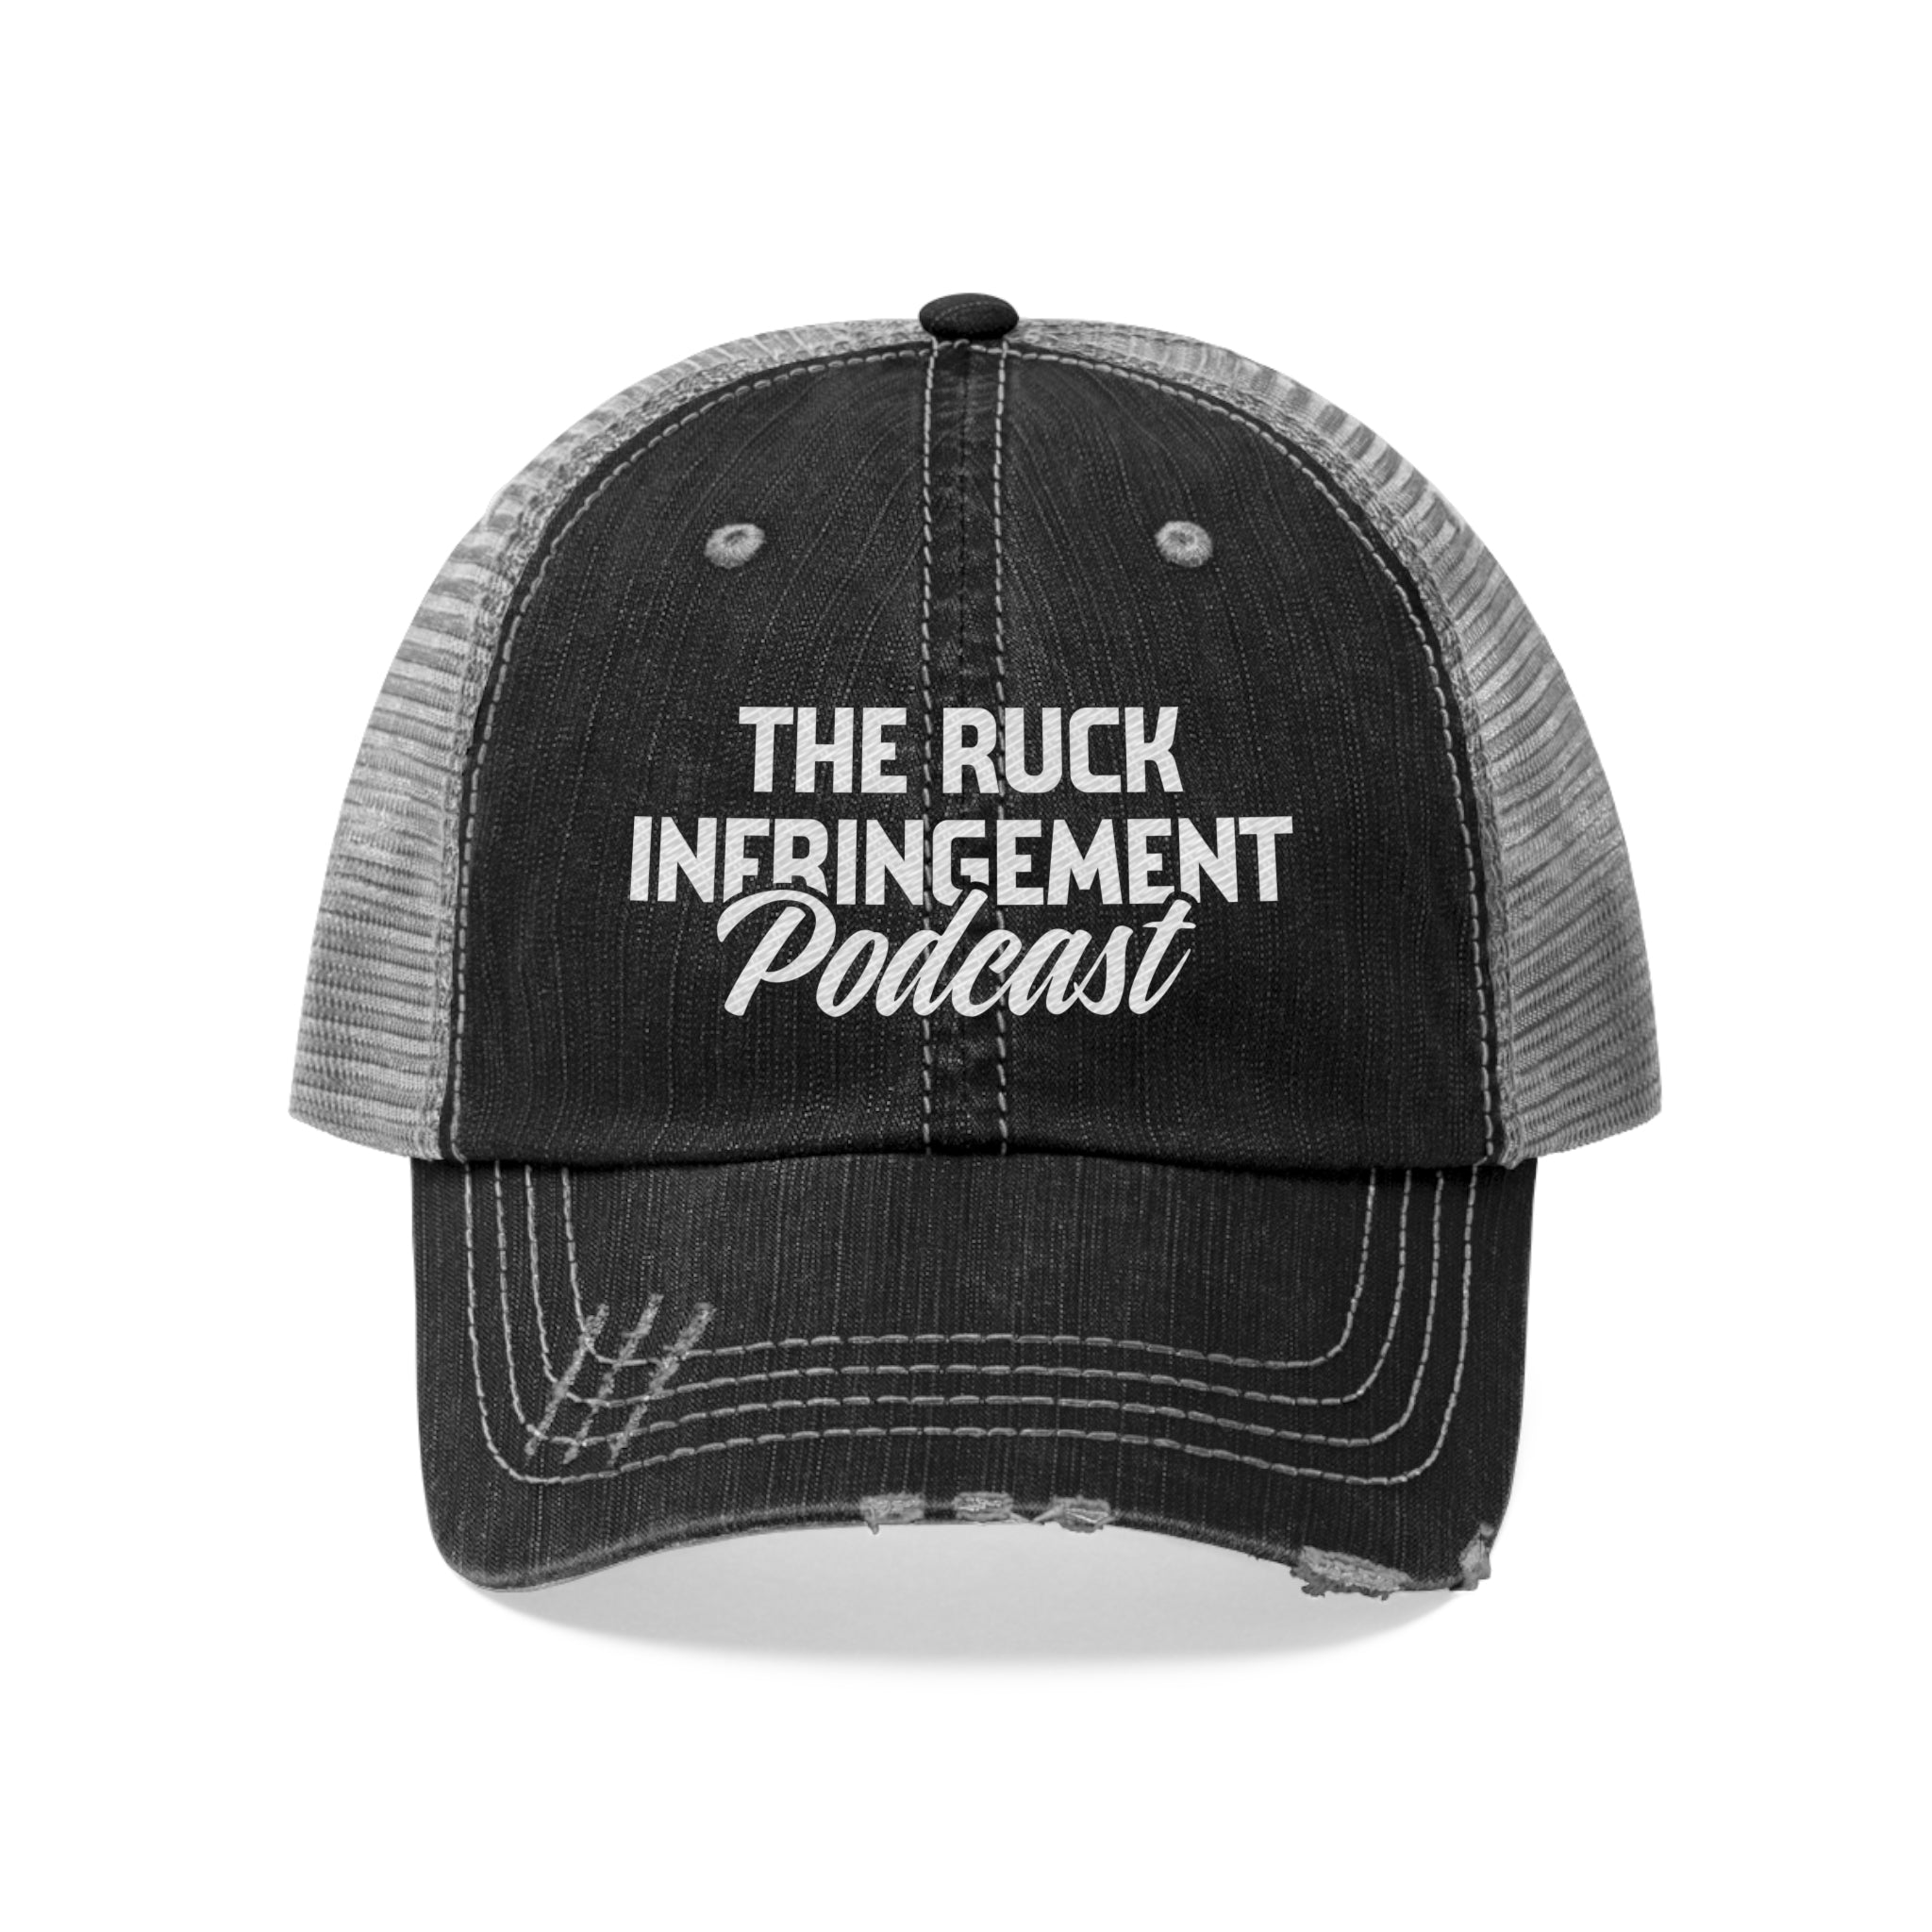 The Ruck Infringement Podcast Trucker Hat – Rugby League Merch